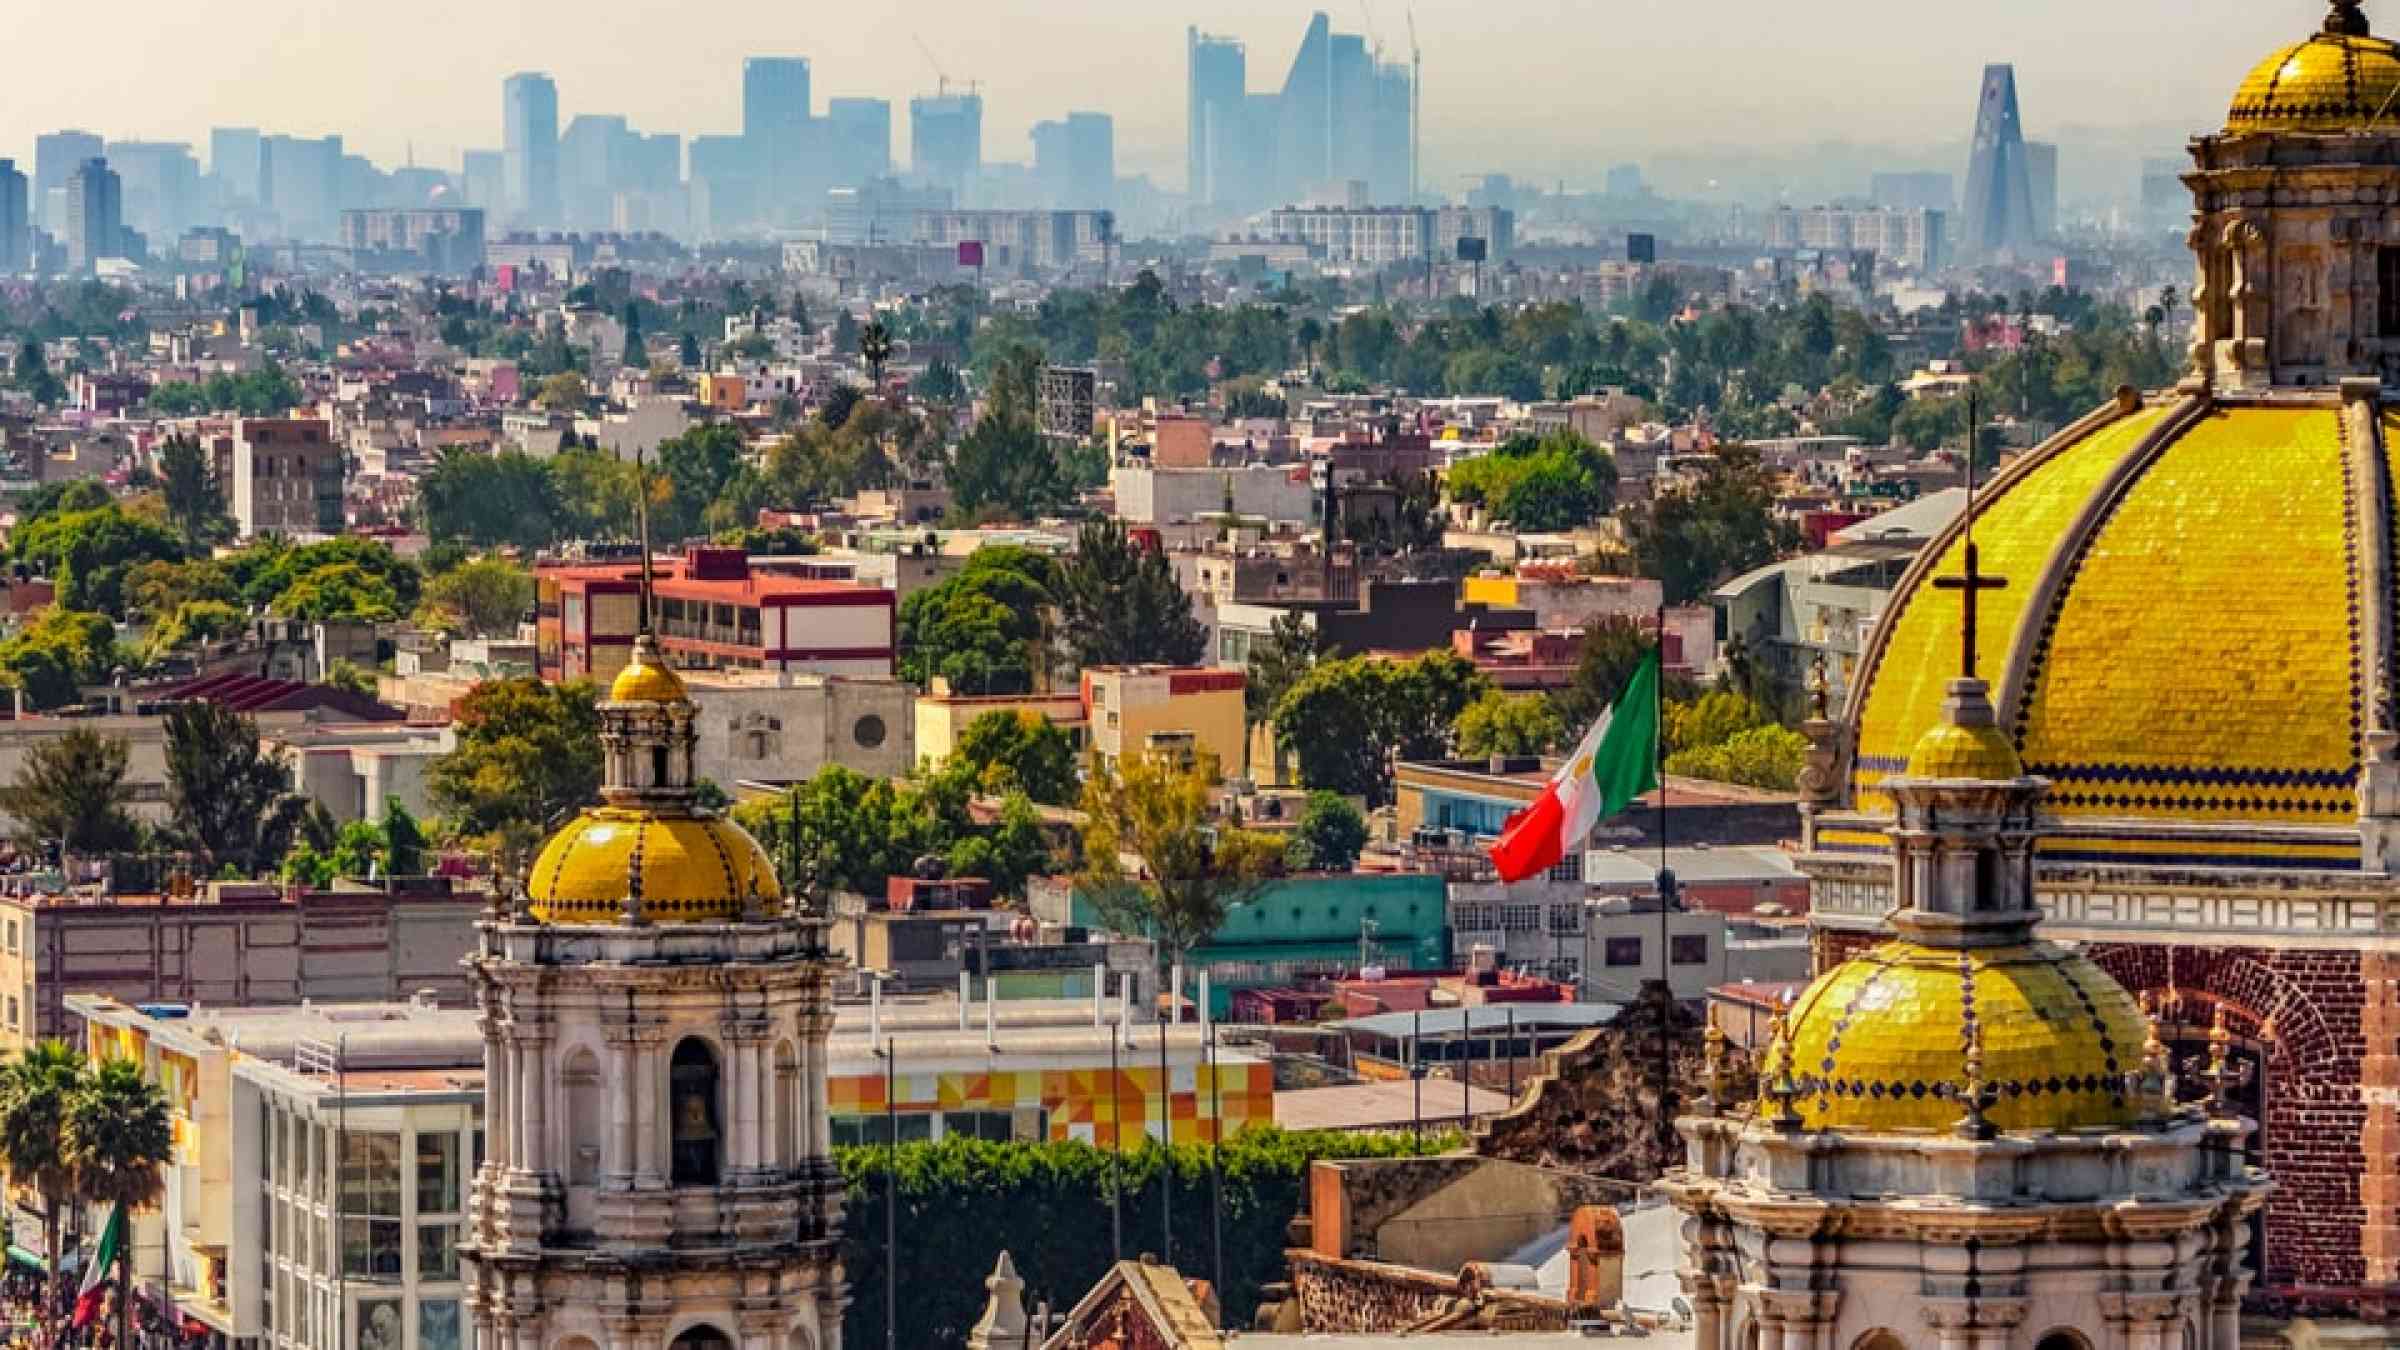 Basilica in Mexico City